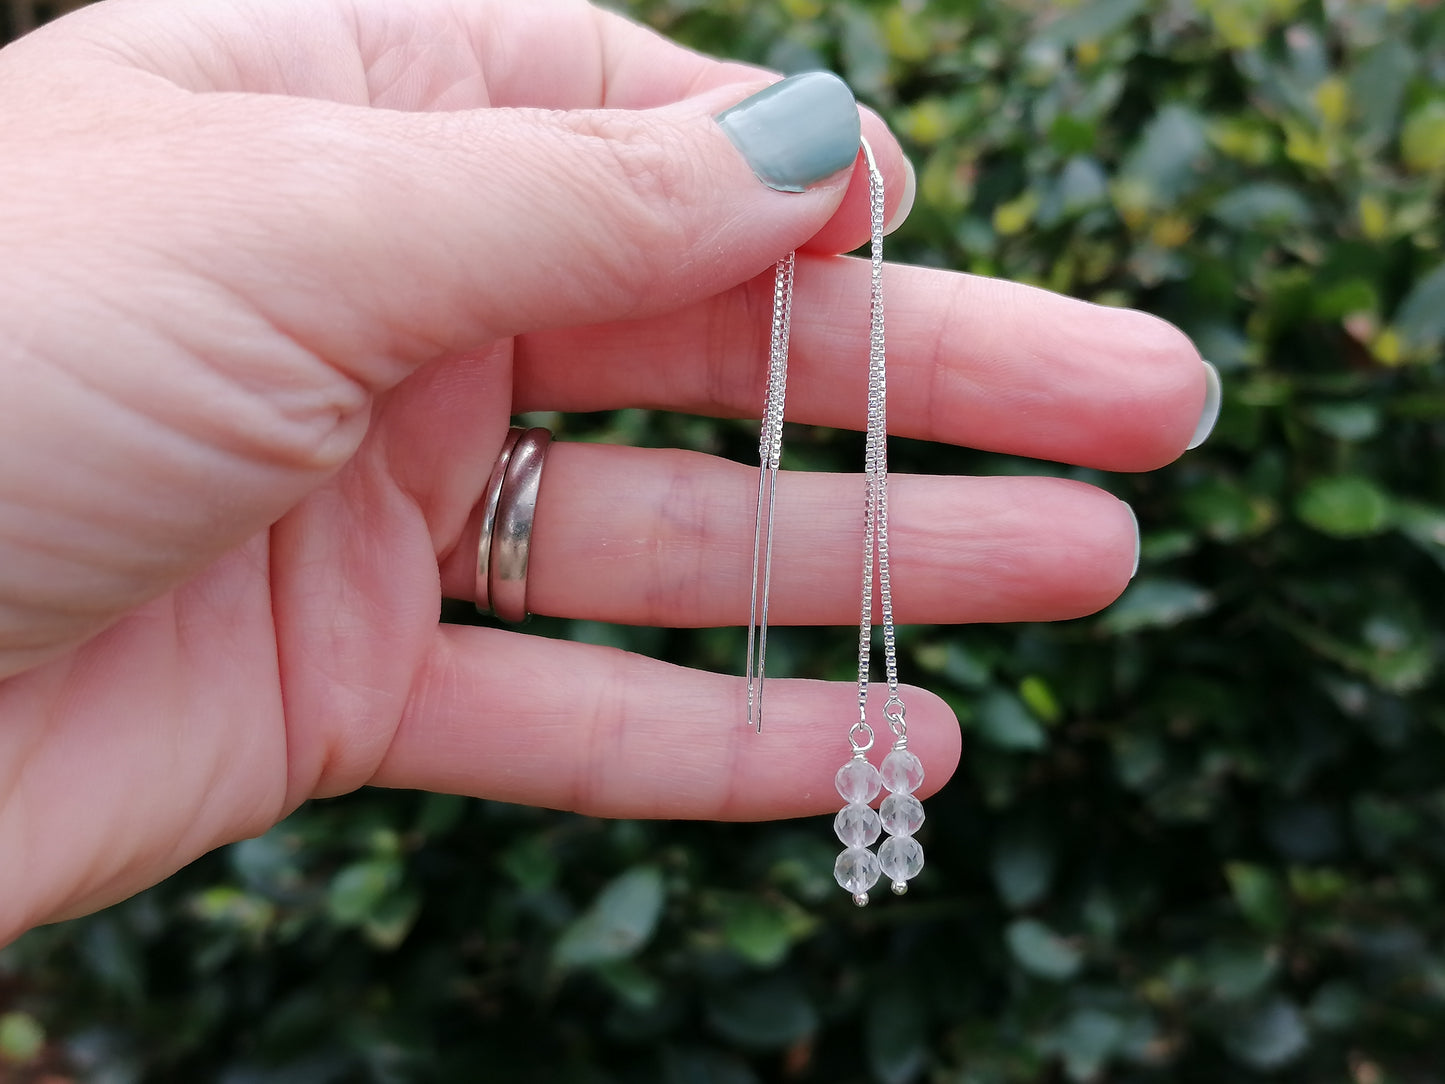 Crystal quartz threader earrings in sterling silver. April birthstone earrings.